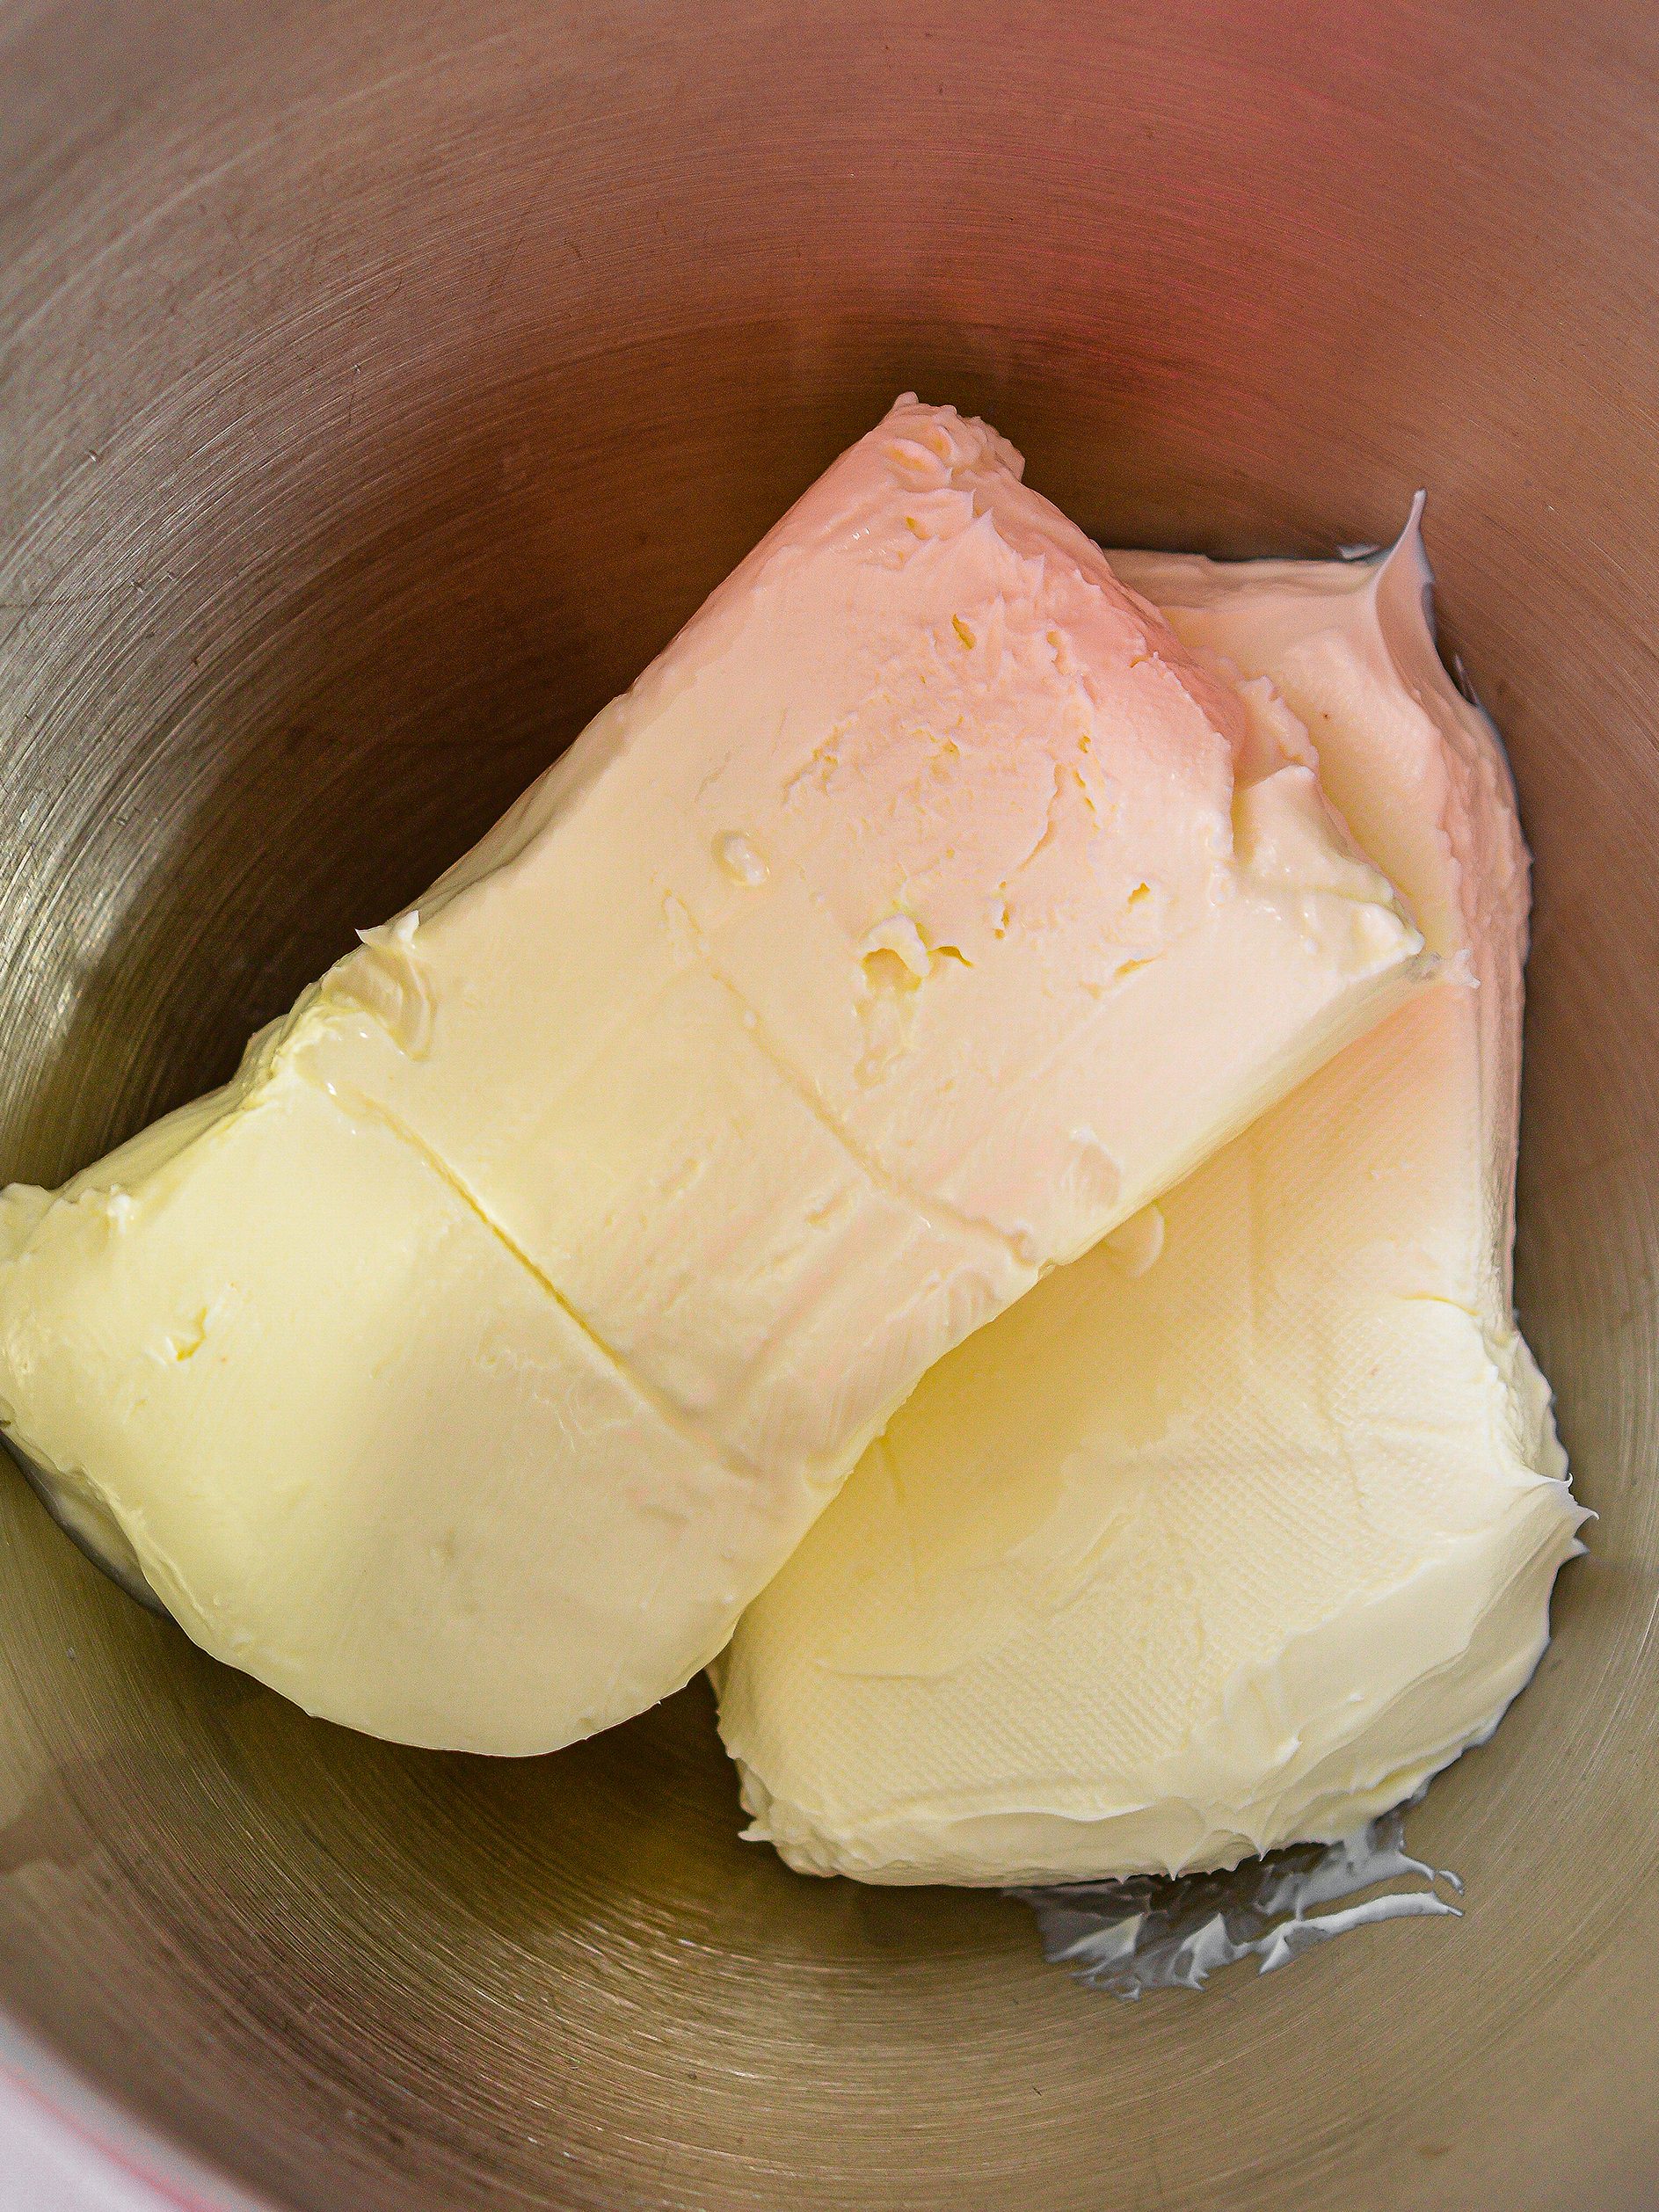 Adding cream cheese